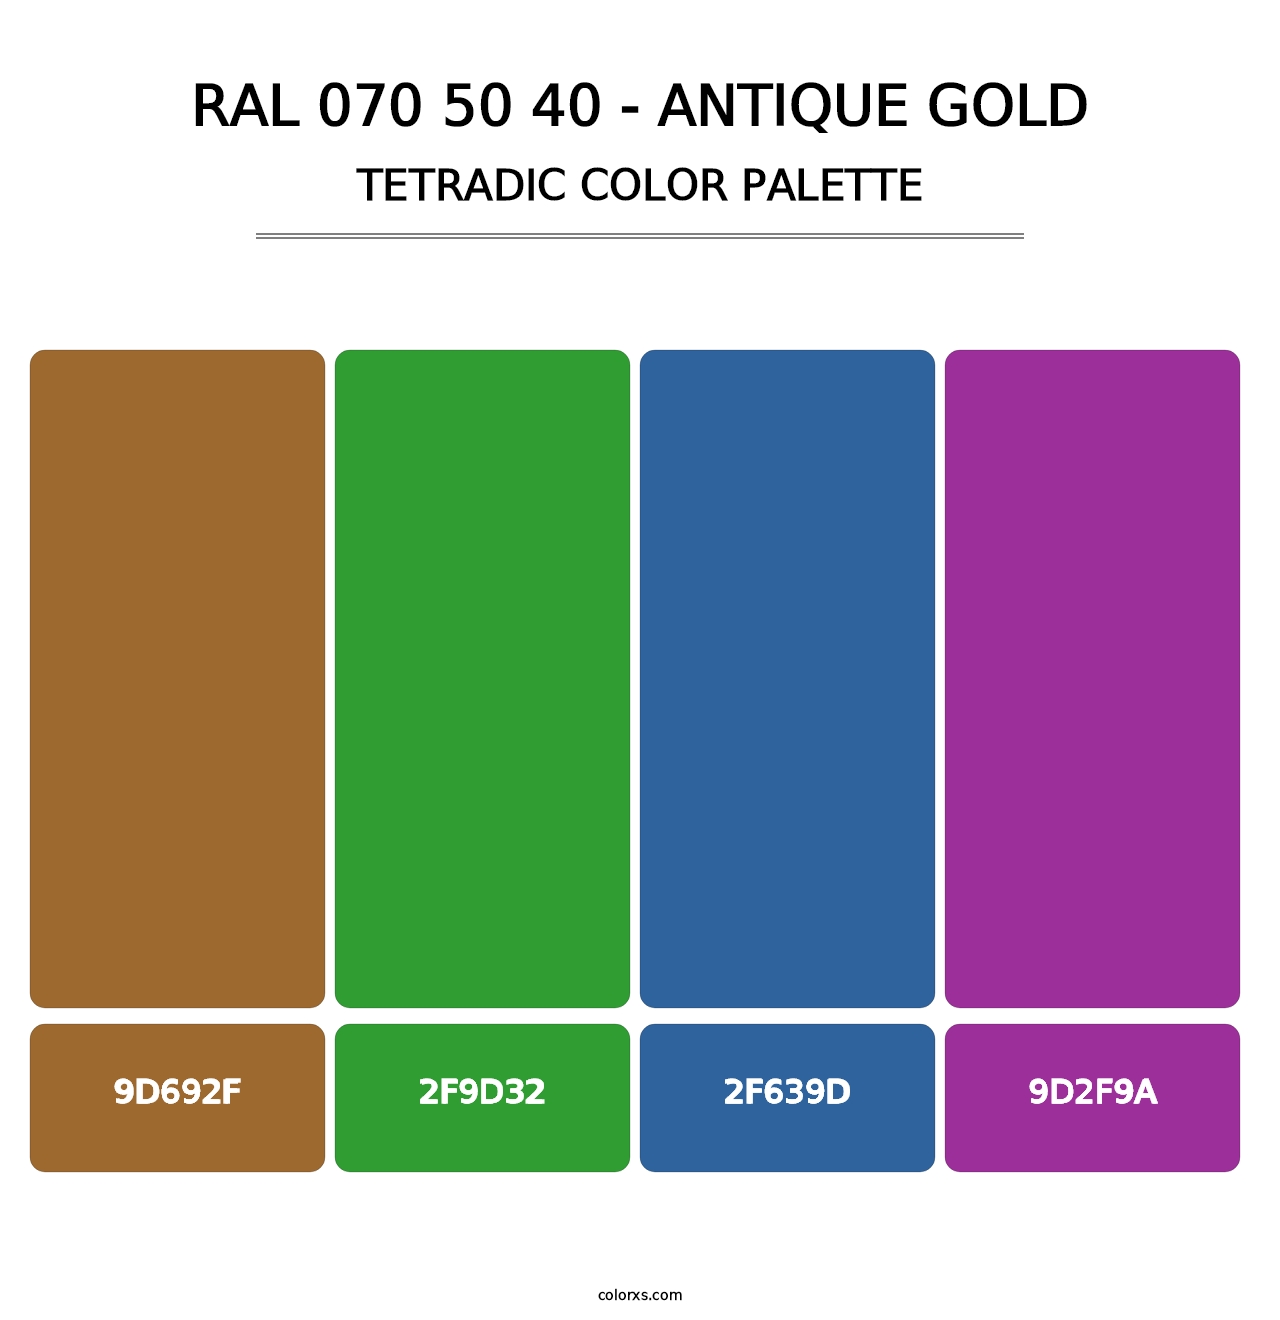 RAL 070 50 40 - Antique Gold - Tetradic Color Palette